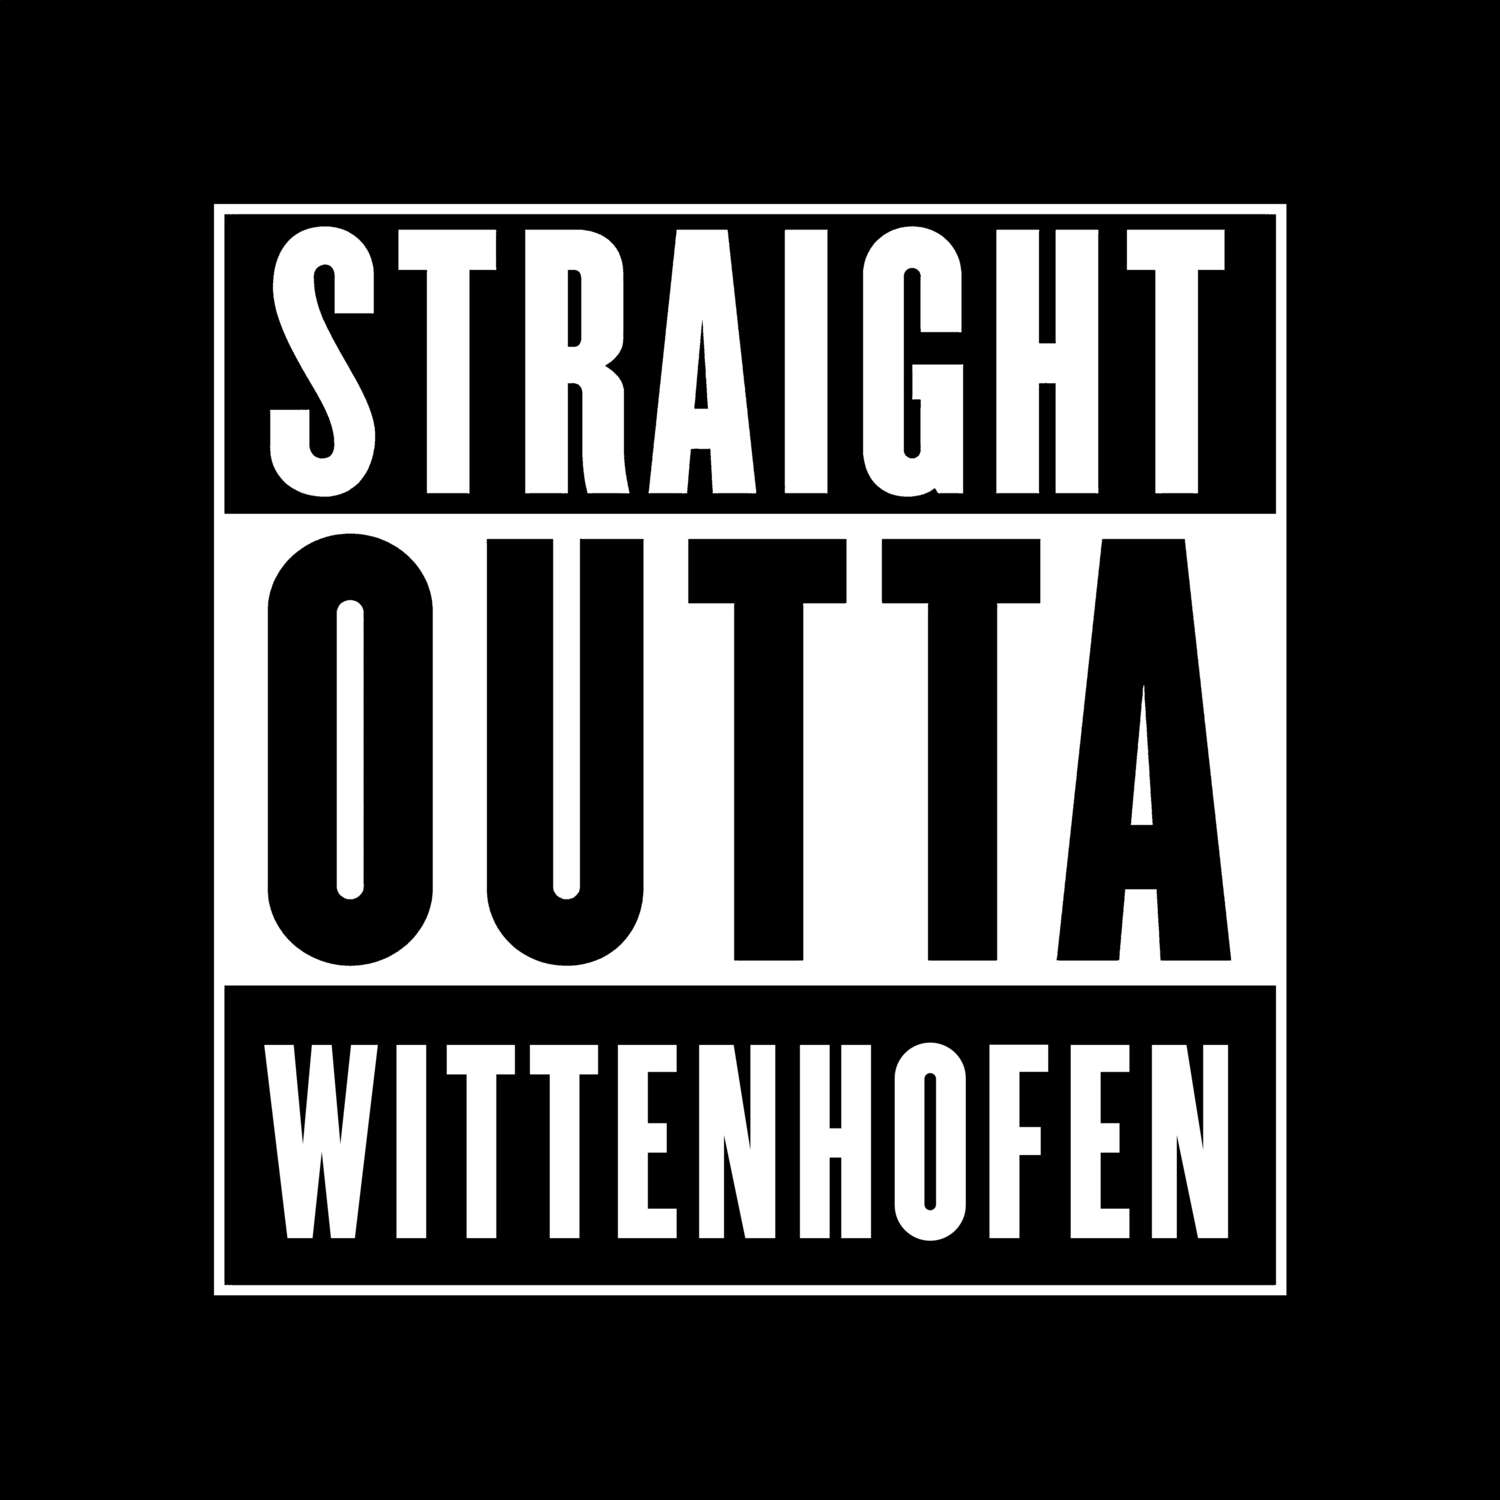 Wittenhofen T-Shirt »Straight Outta«